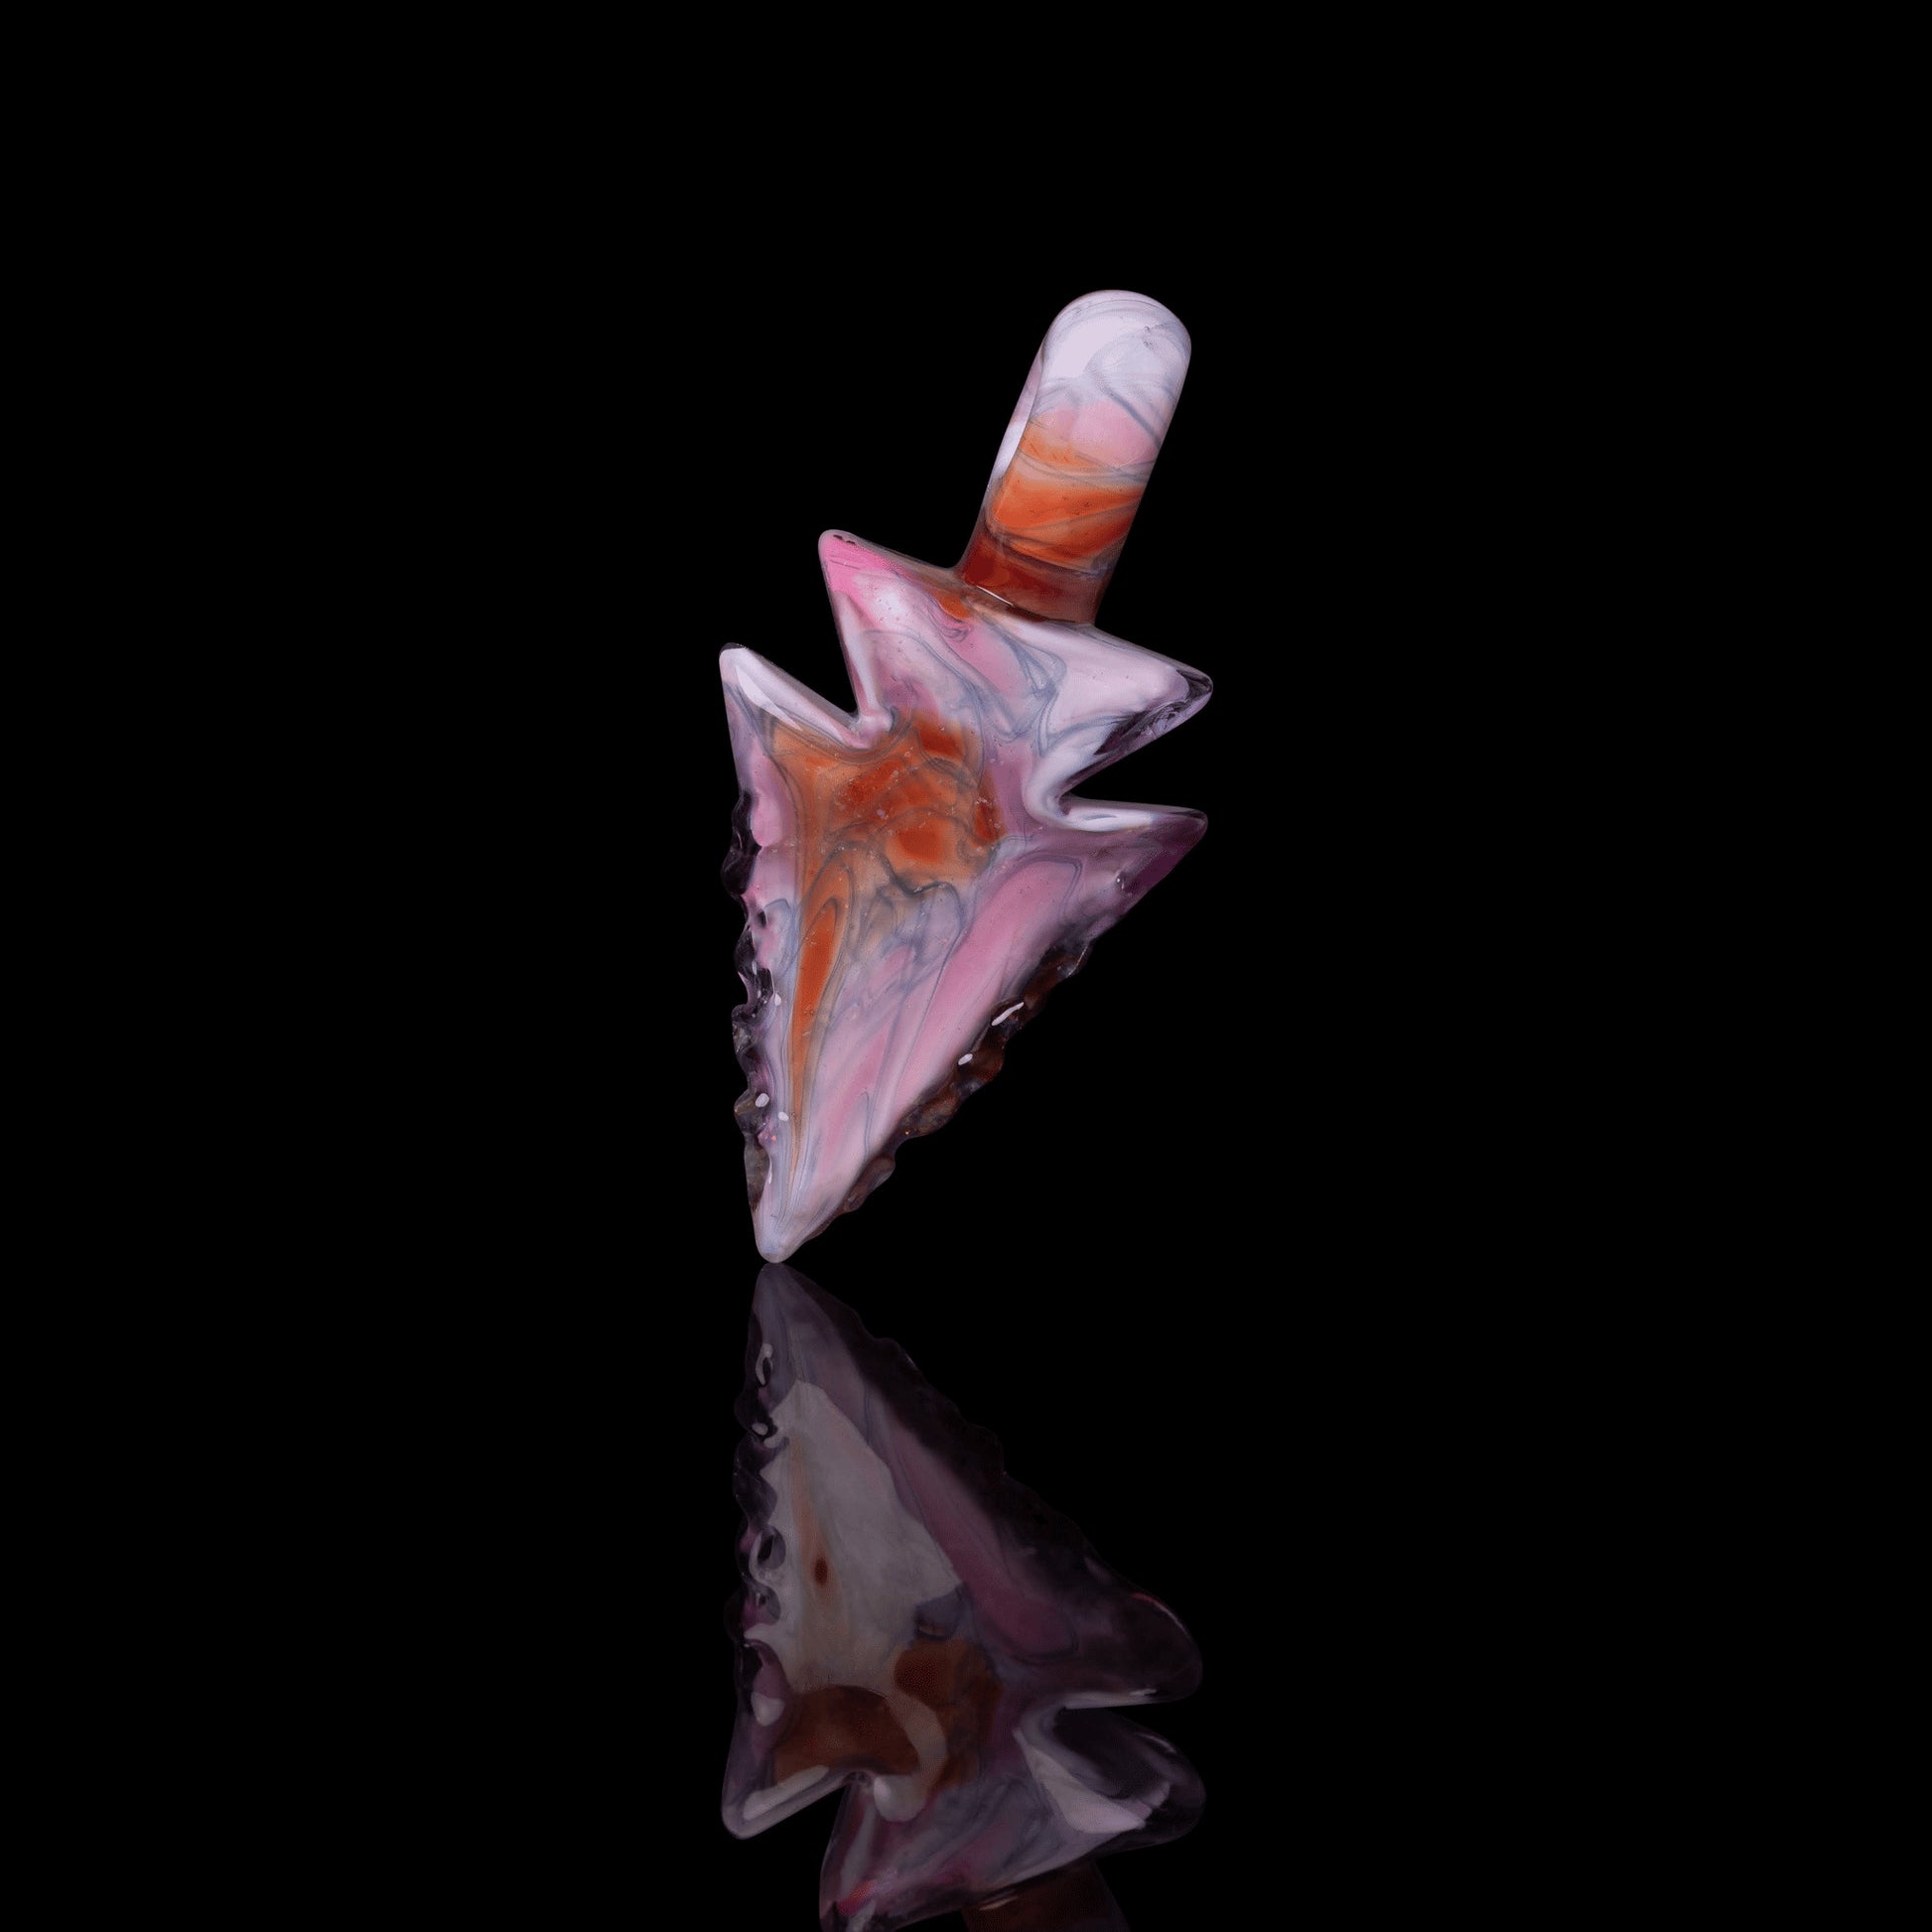 exquisite glass pendant - Collab Arrowhead Pendant (B) by Elks That Run x Scomo Moanet (Scribble Season 2022)